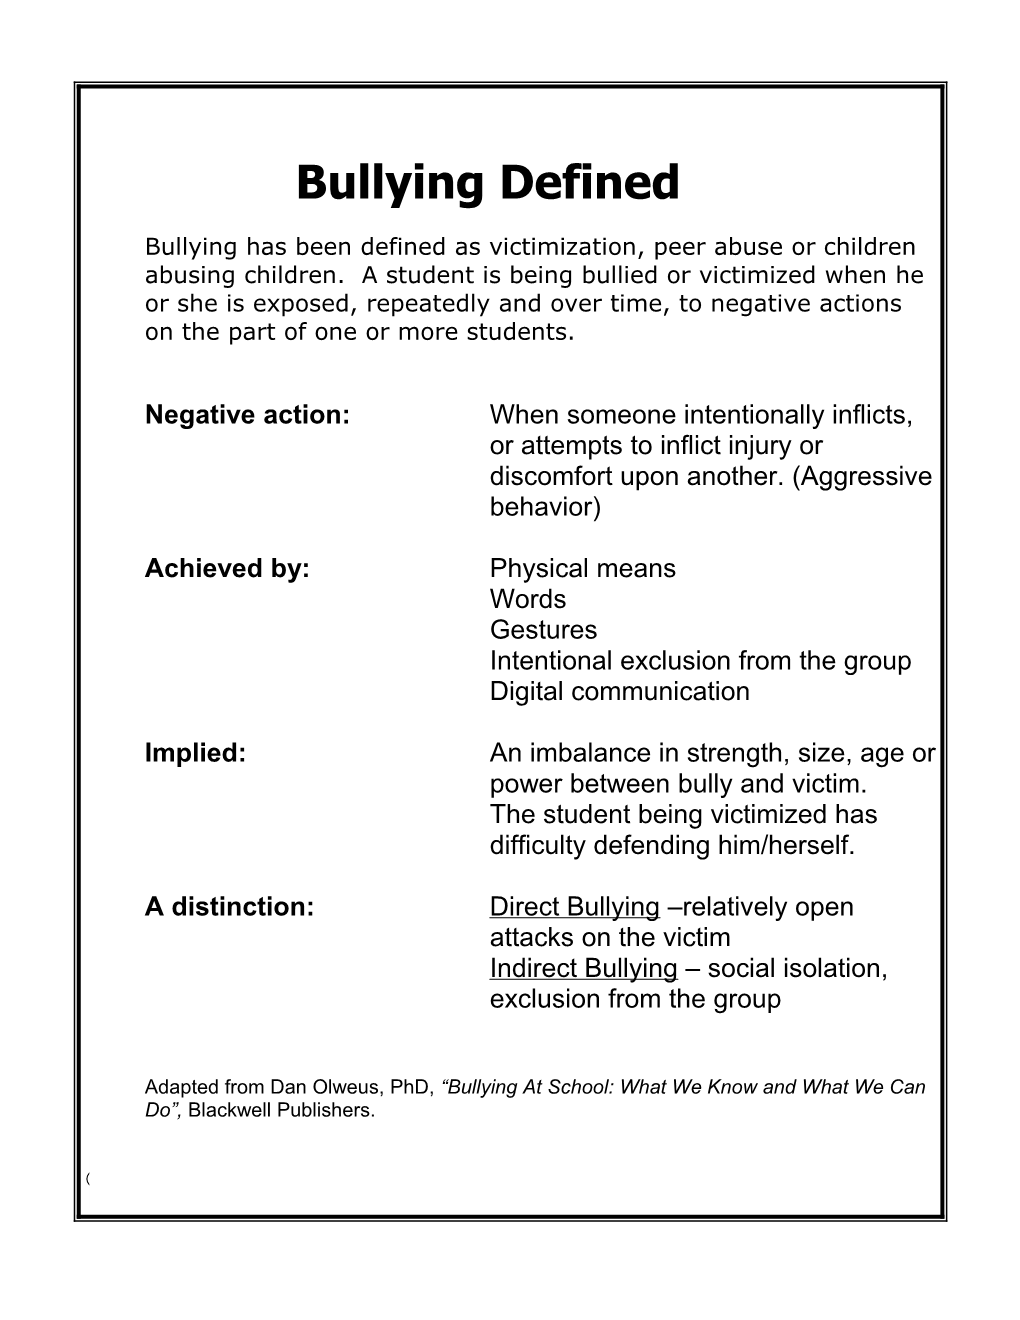 Basic Definition of Bullying